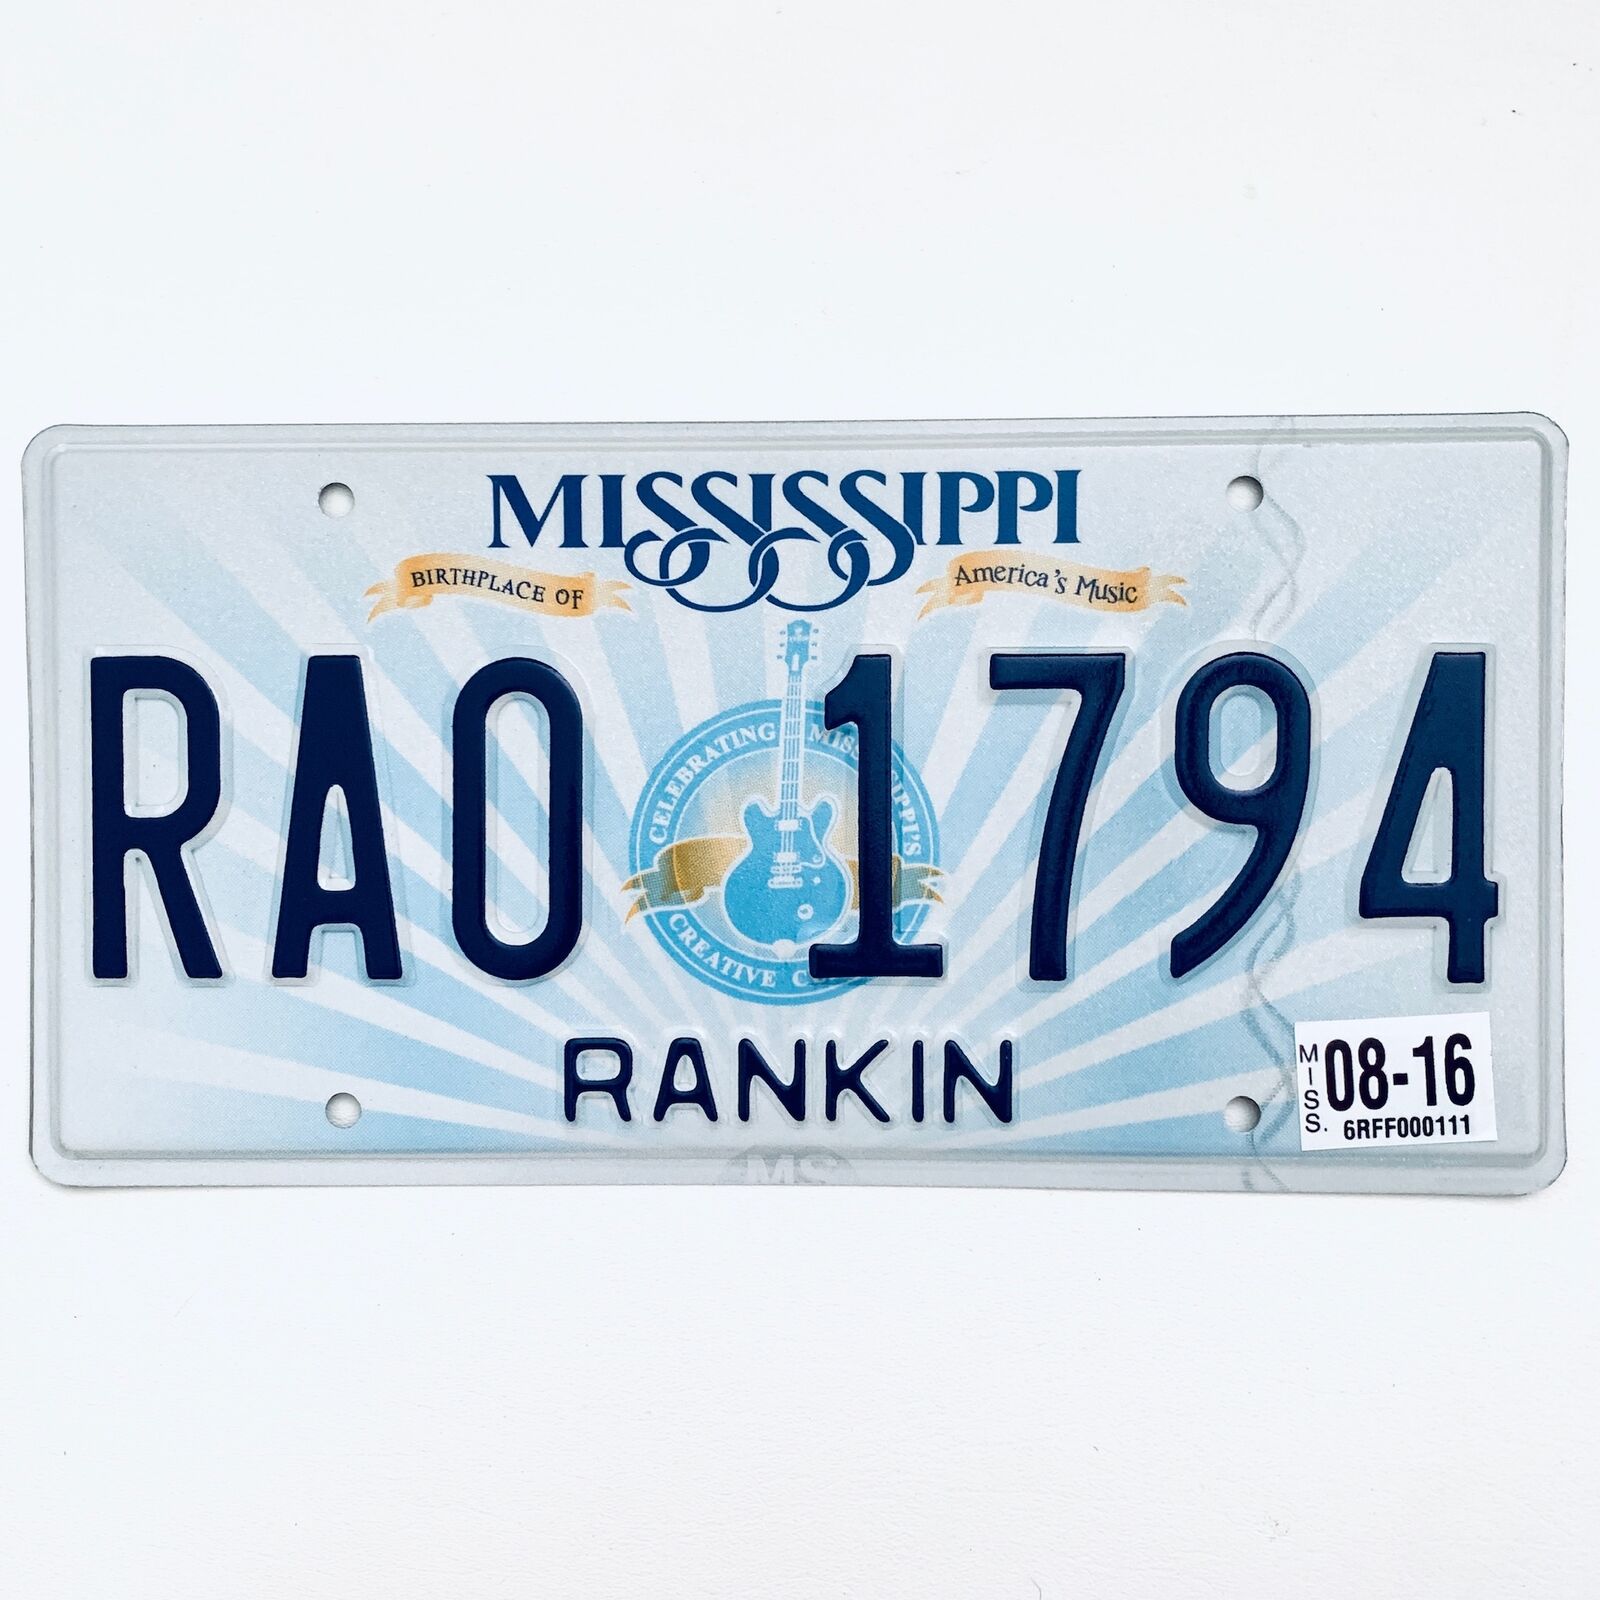 2016 United States Mississippi Rankin County Passenger License Plate RA0 1781